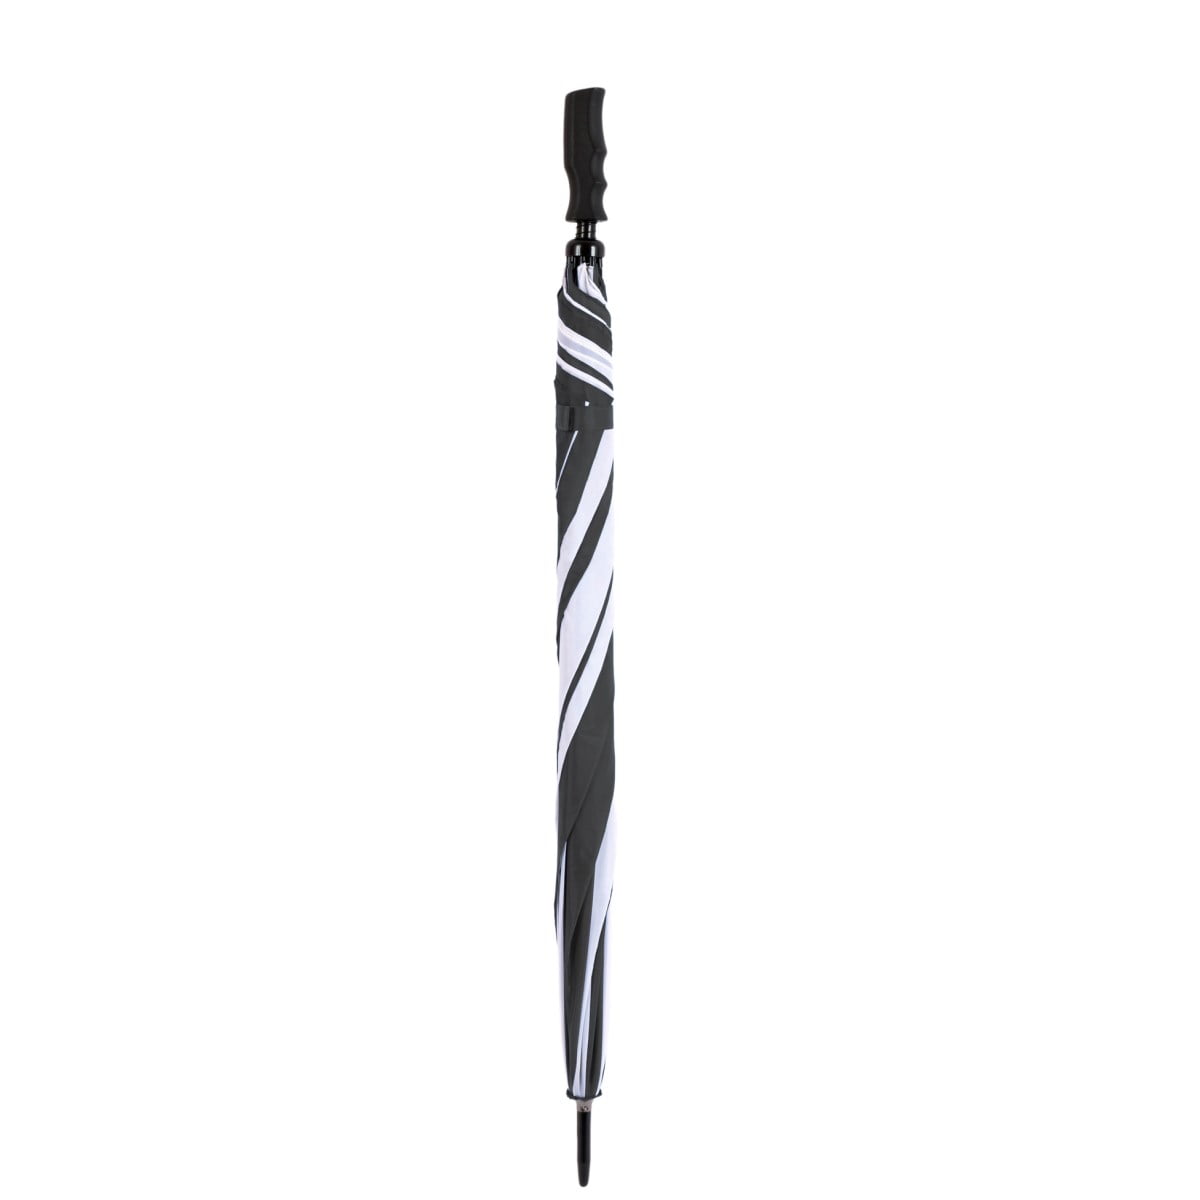 Black & White Golf Umbrella - Windproof - closed, vertical